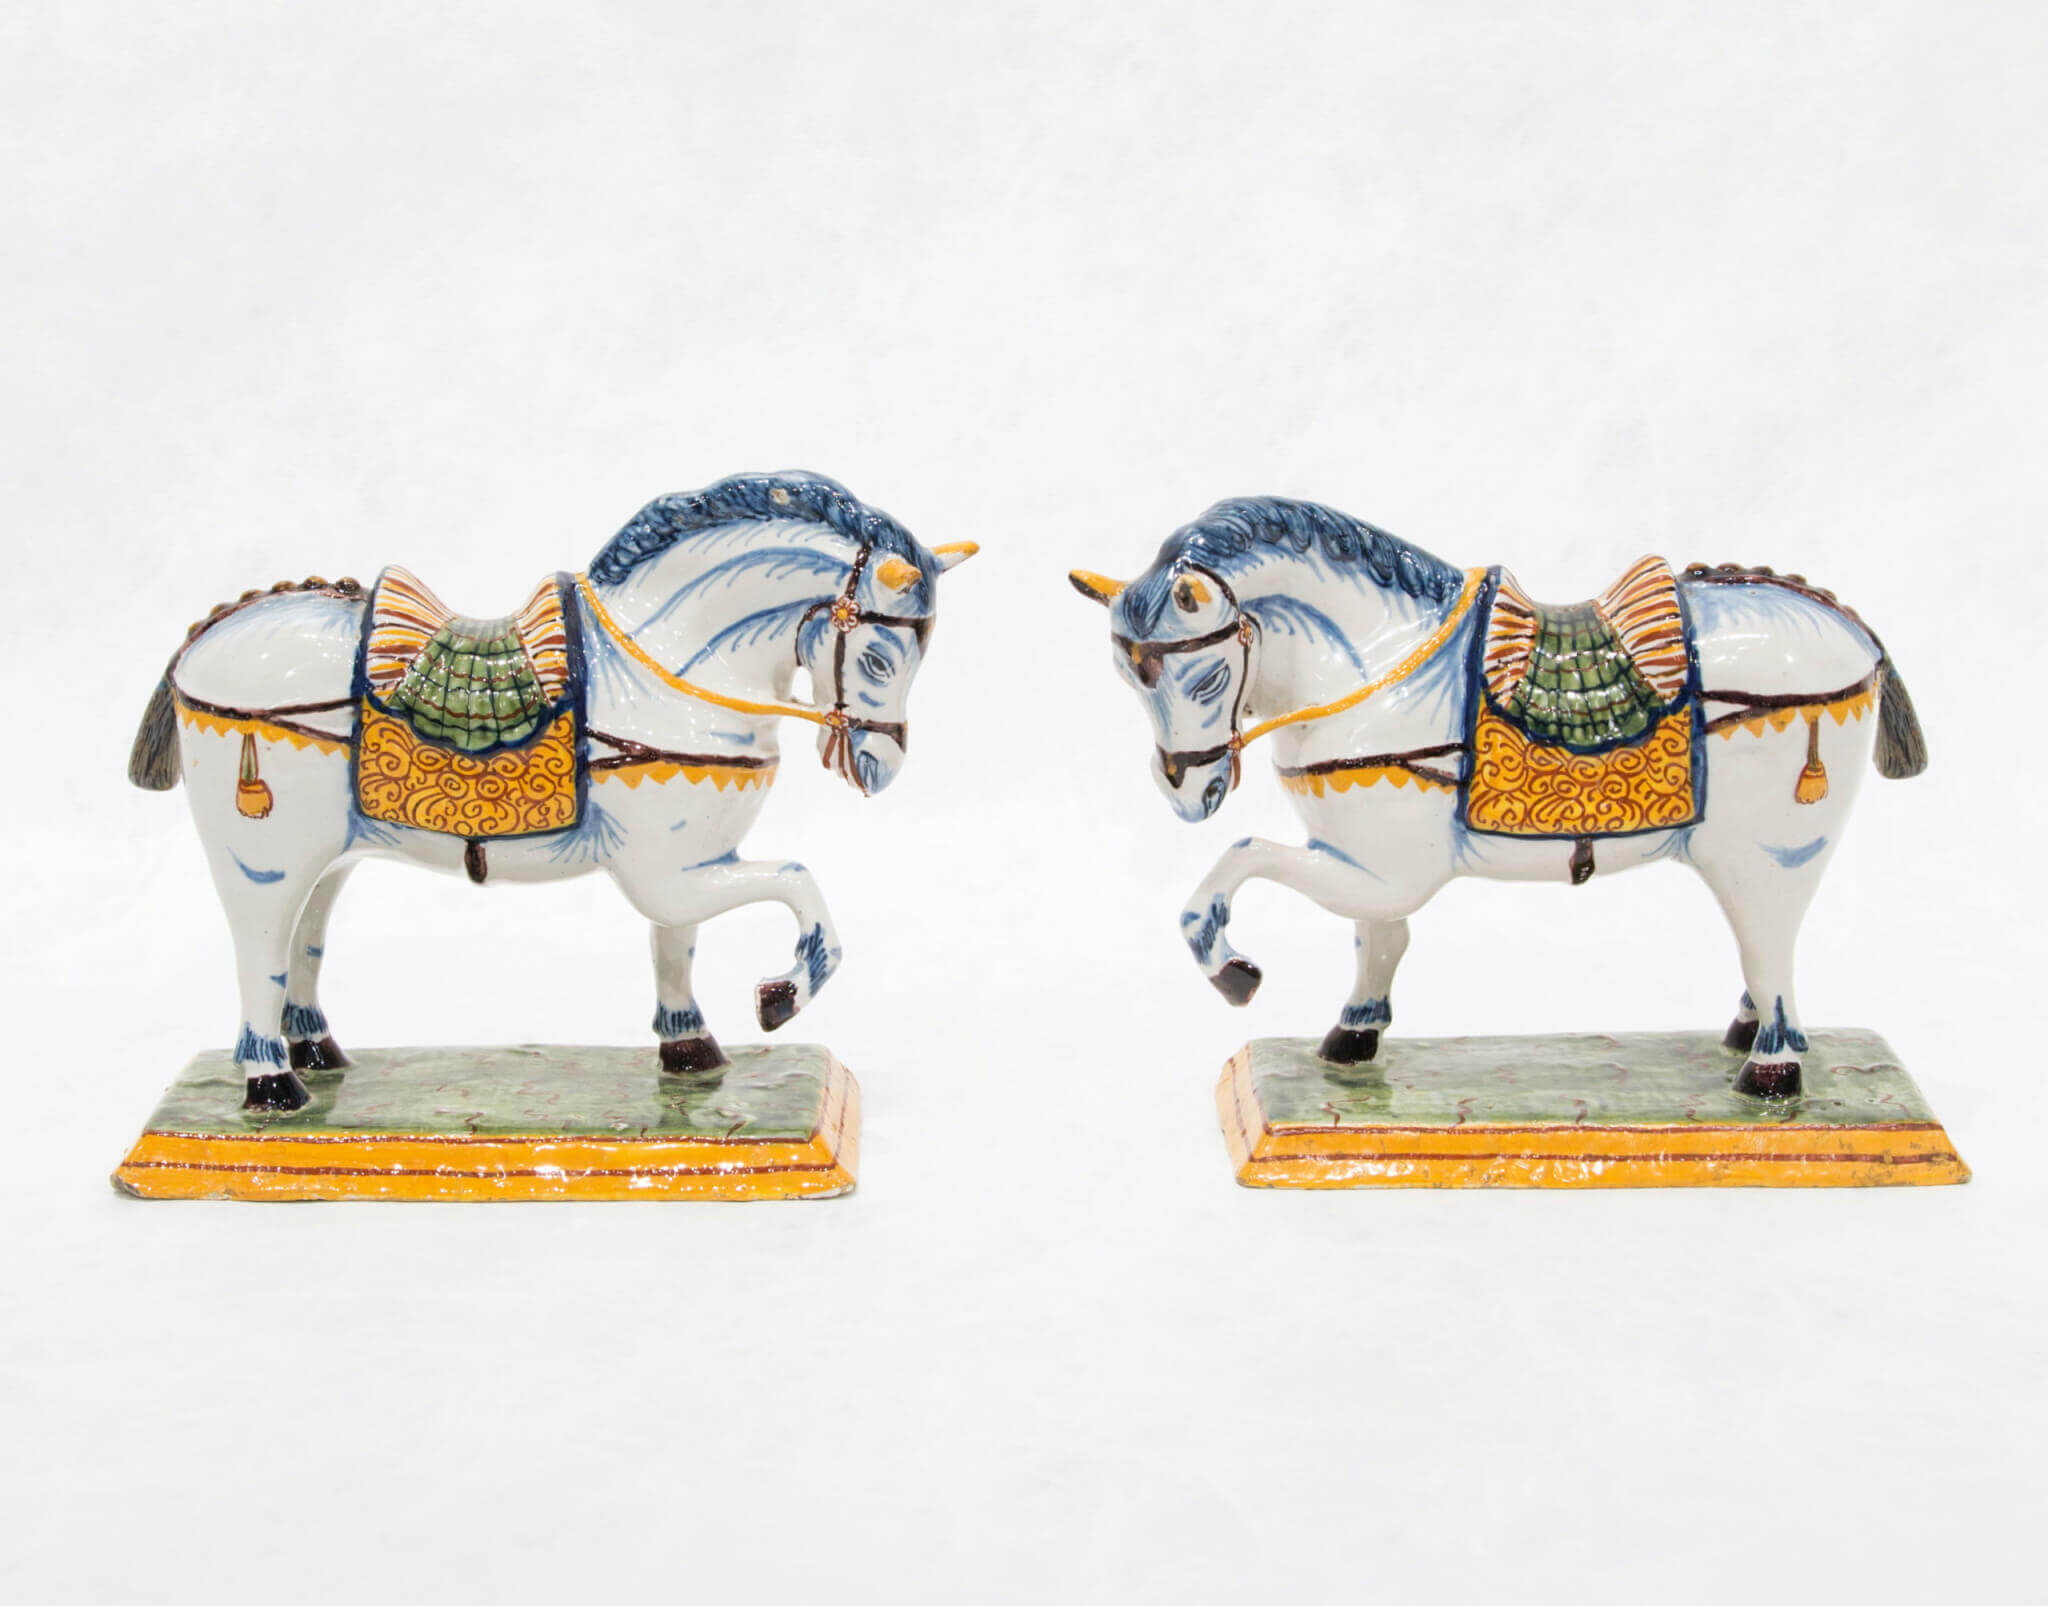 Polychrome models of horses